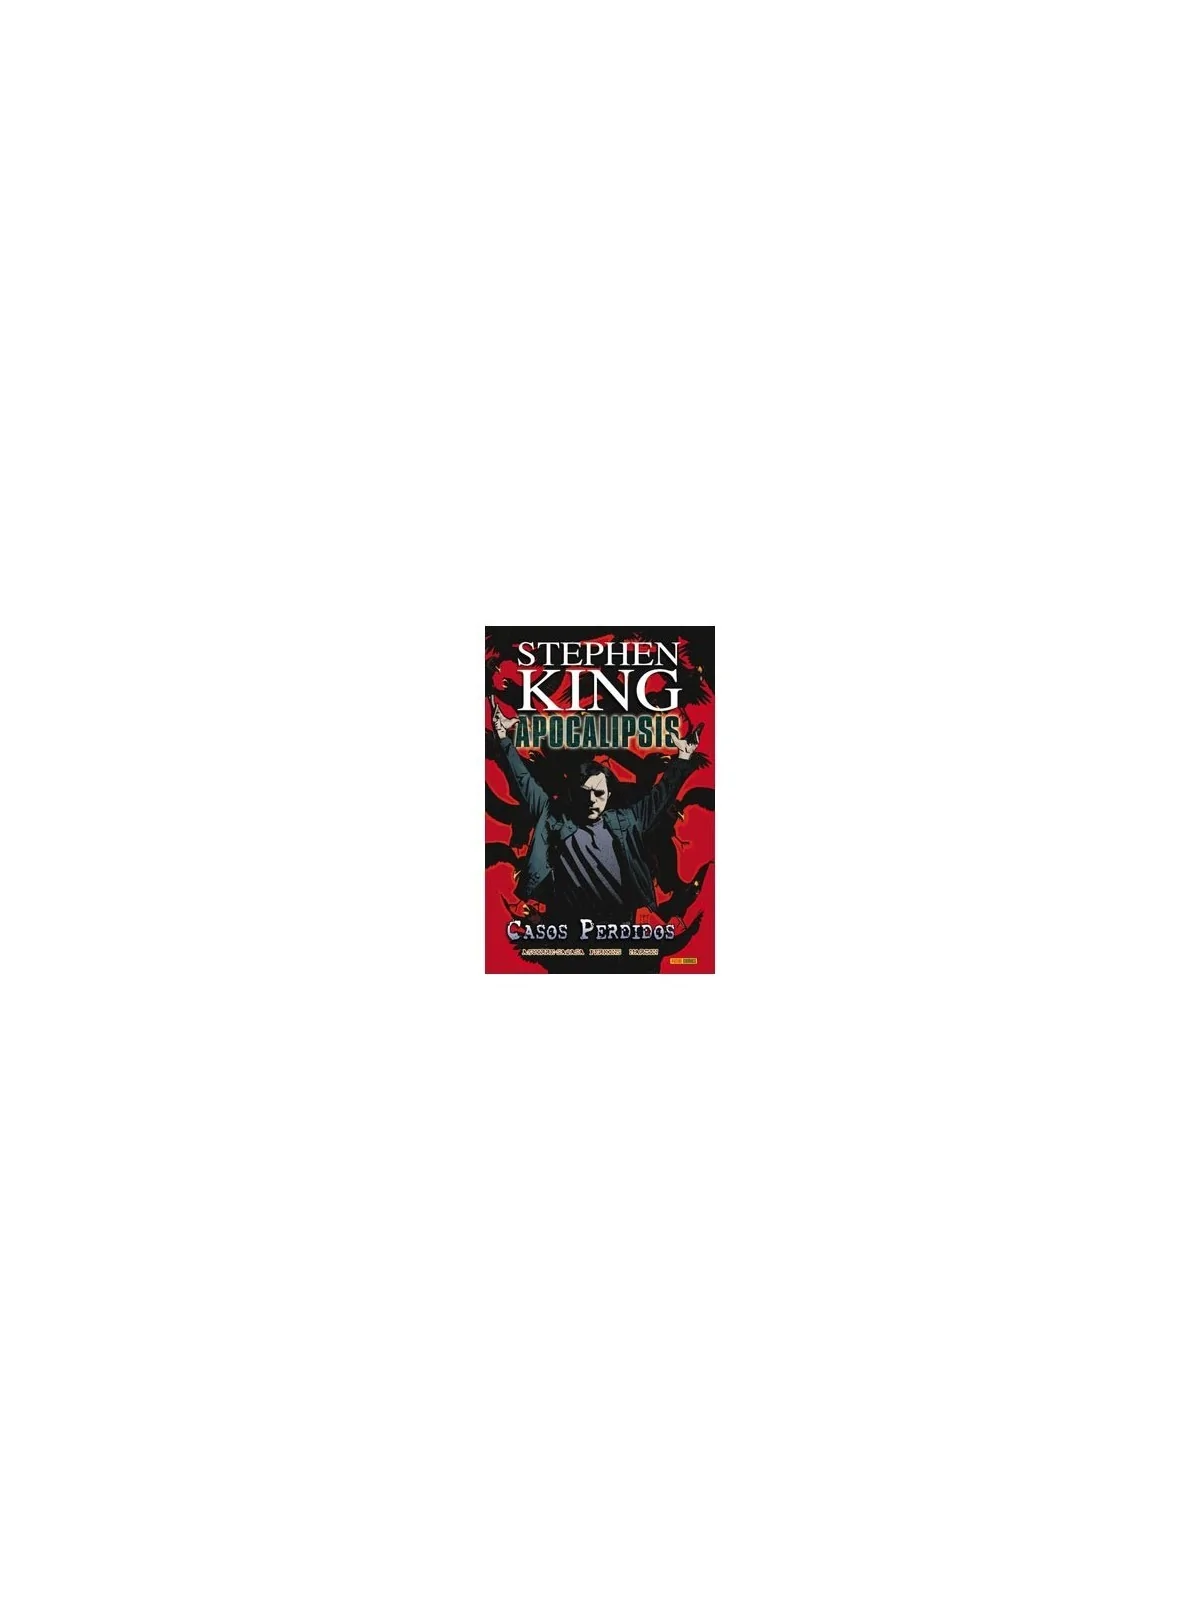 Comprar Apocalipsis de Stephen King 04. Casos Perdidos barato al mejor